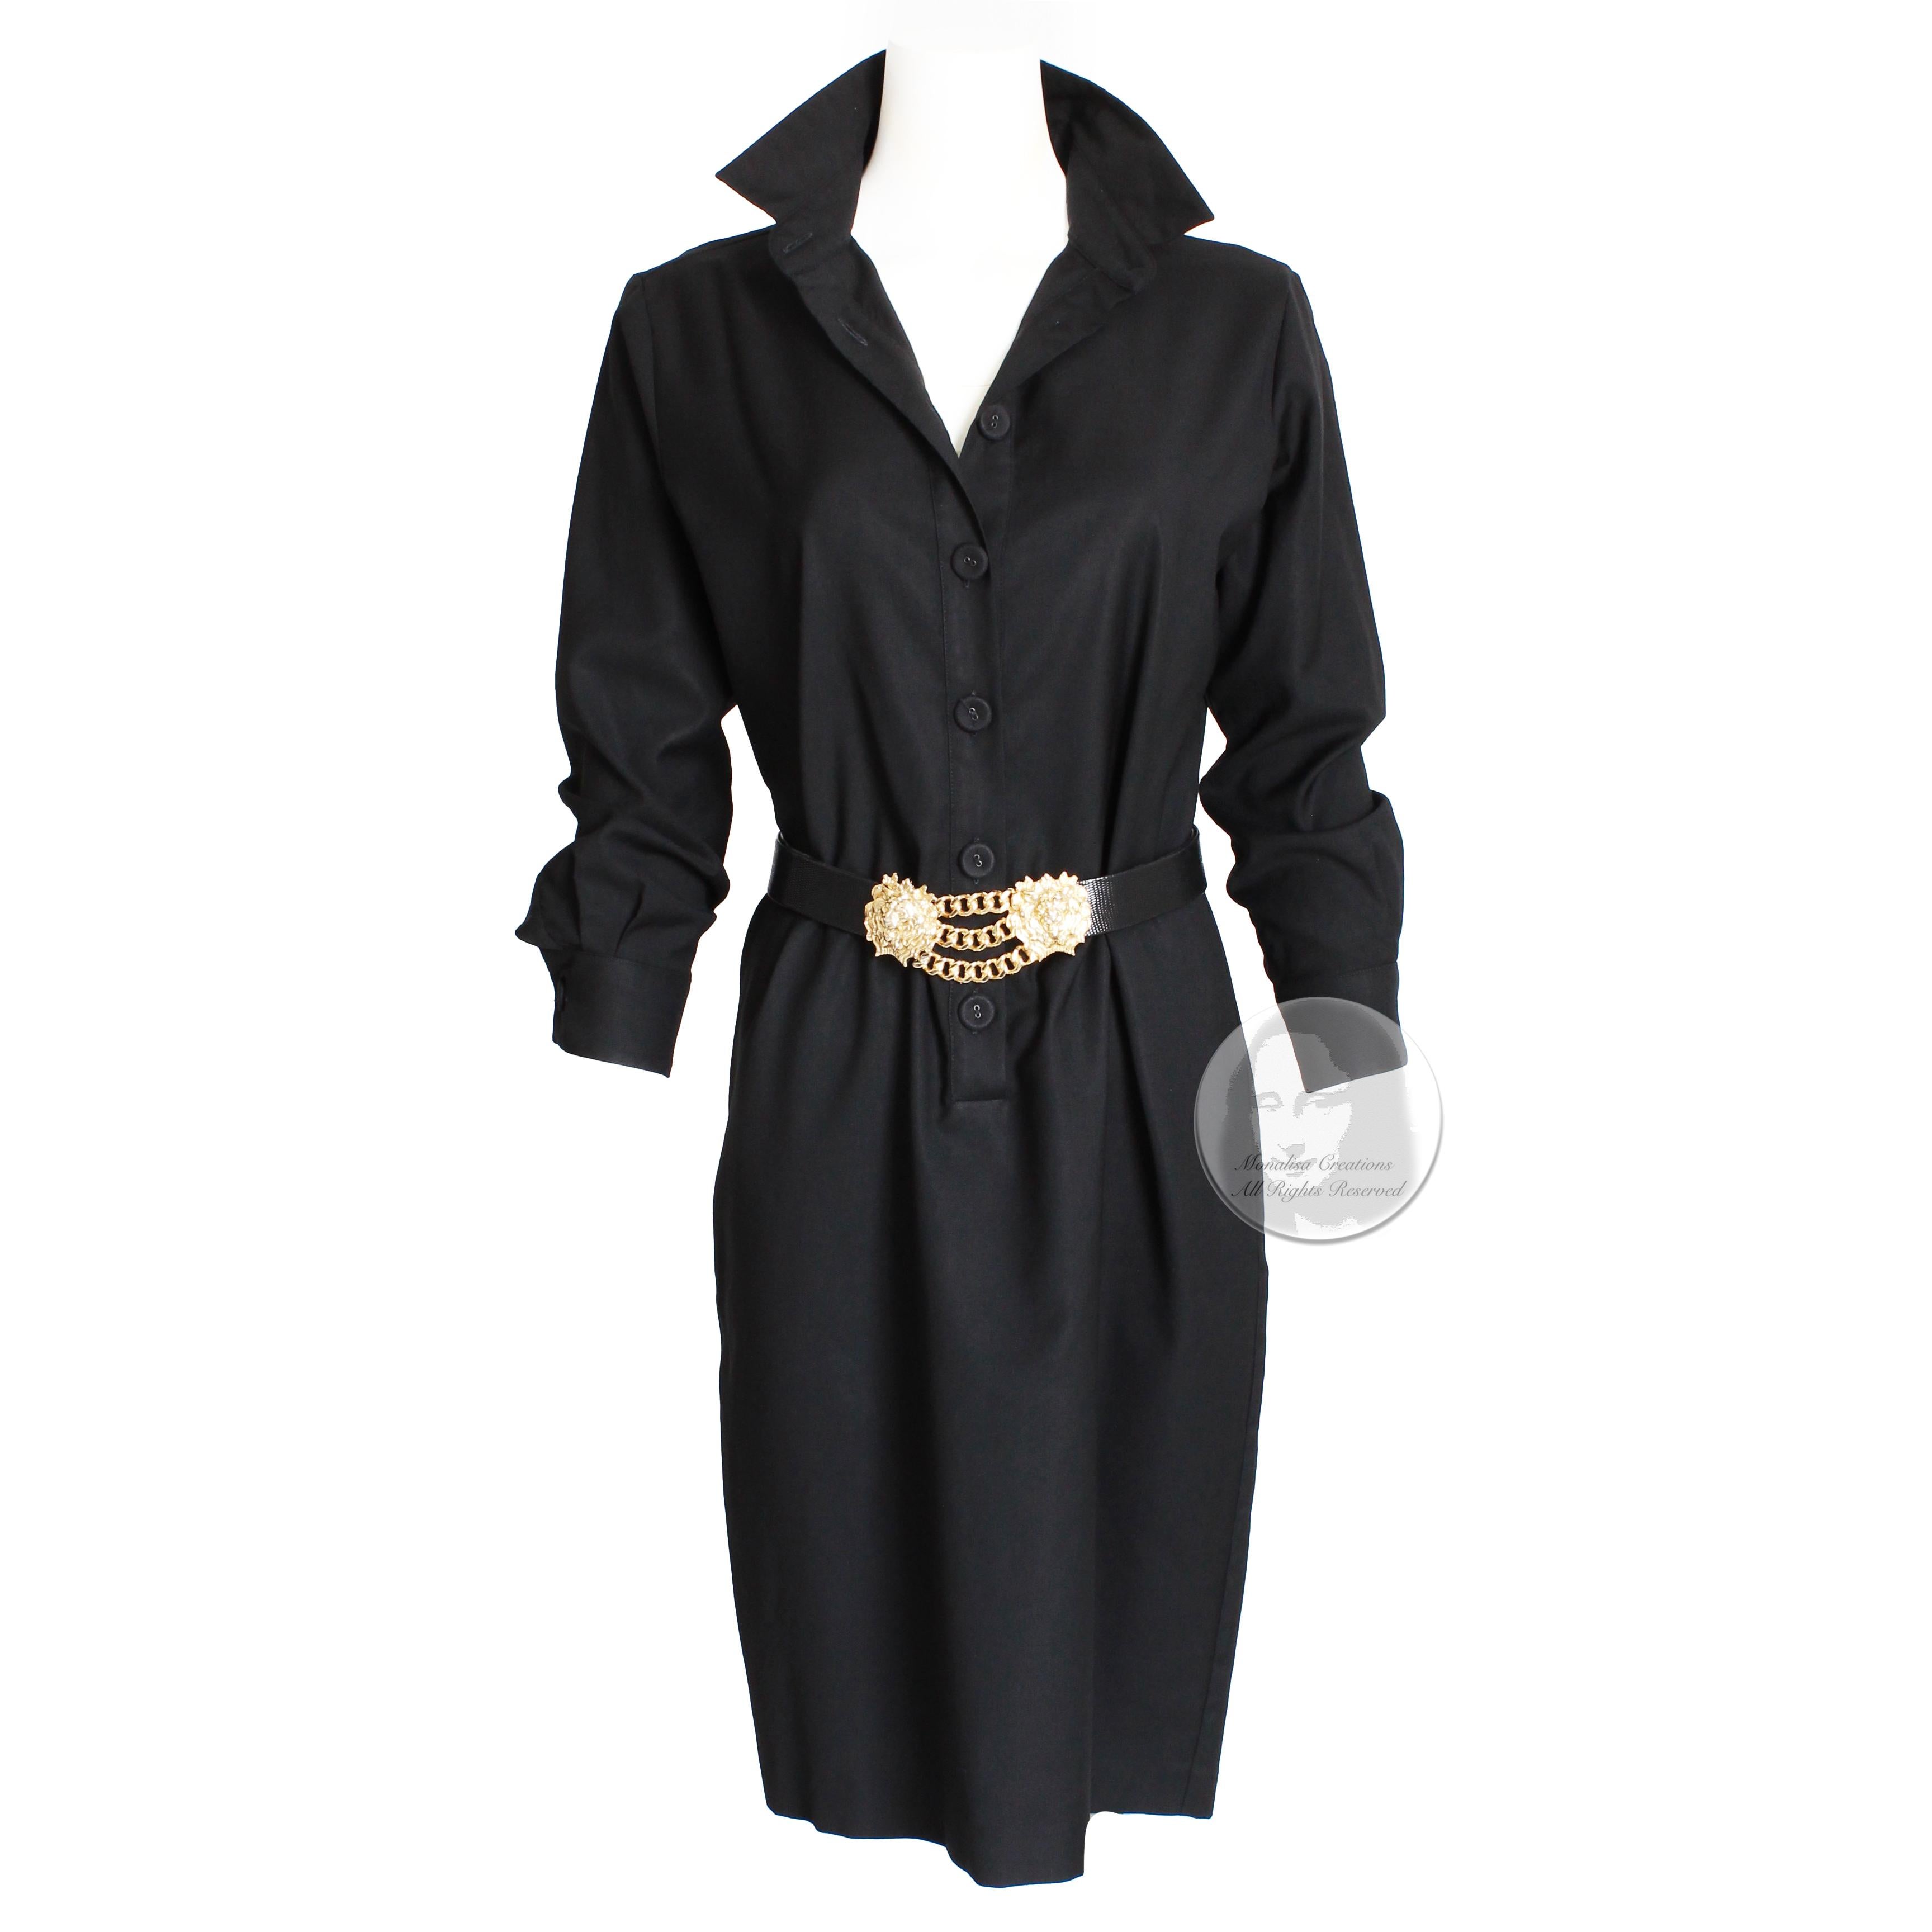 Women's or Men's Bottega Veneta Dress Black Wool Twill Shirtwaist Button Front Sz 42 LBD Italy